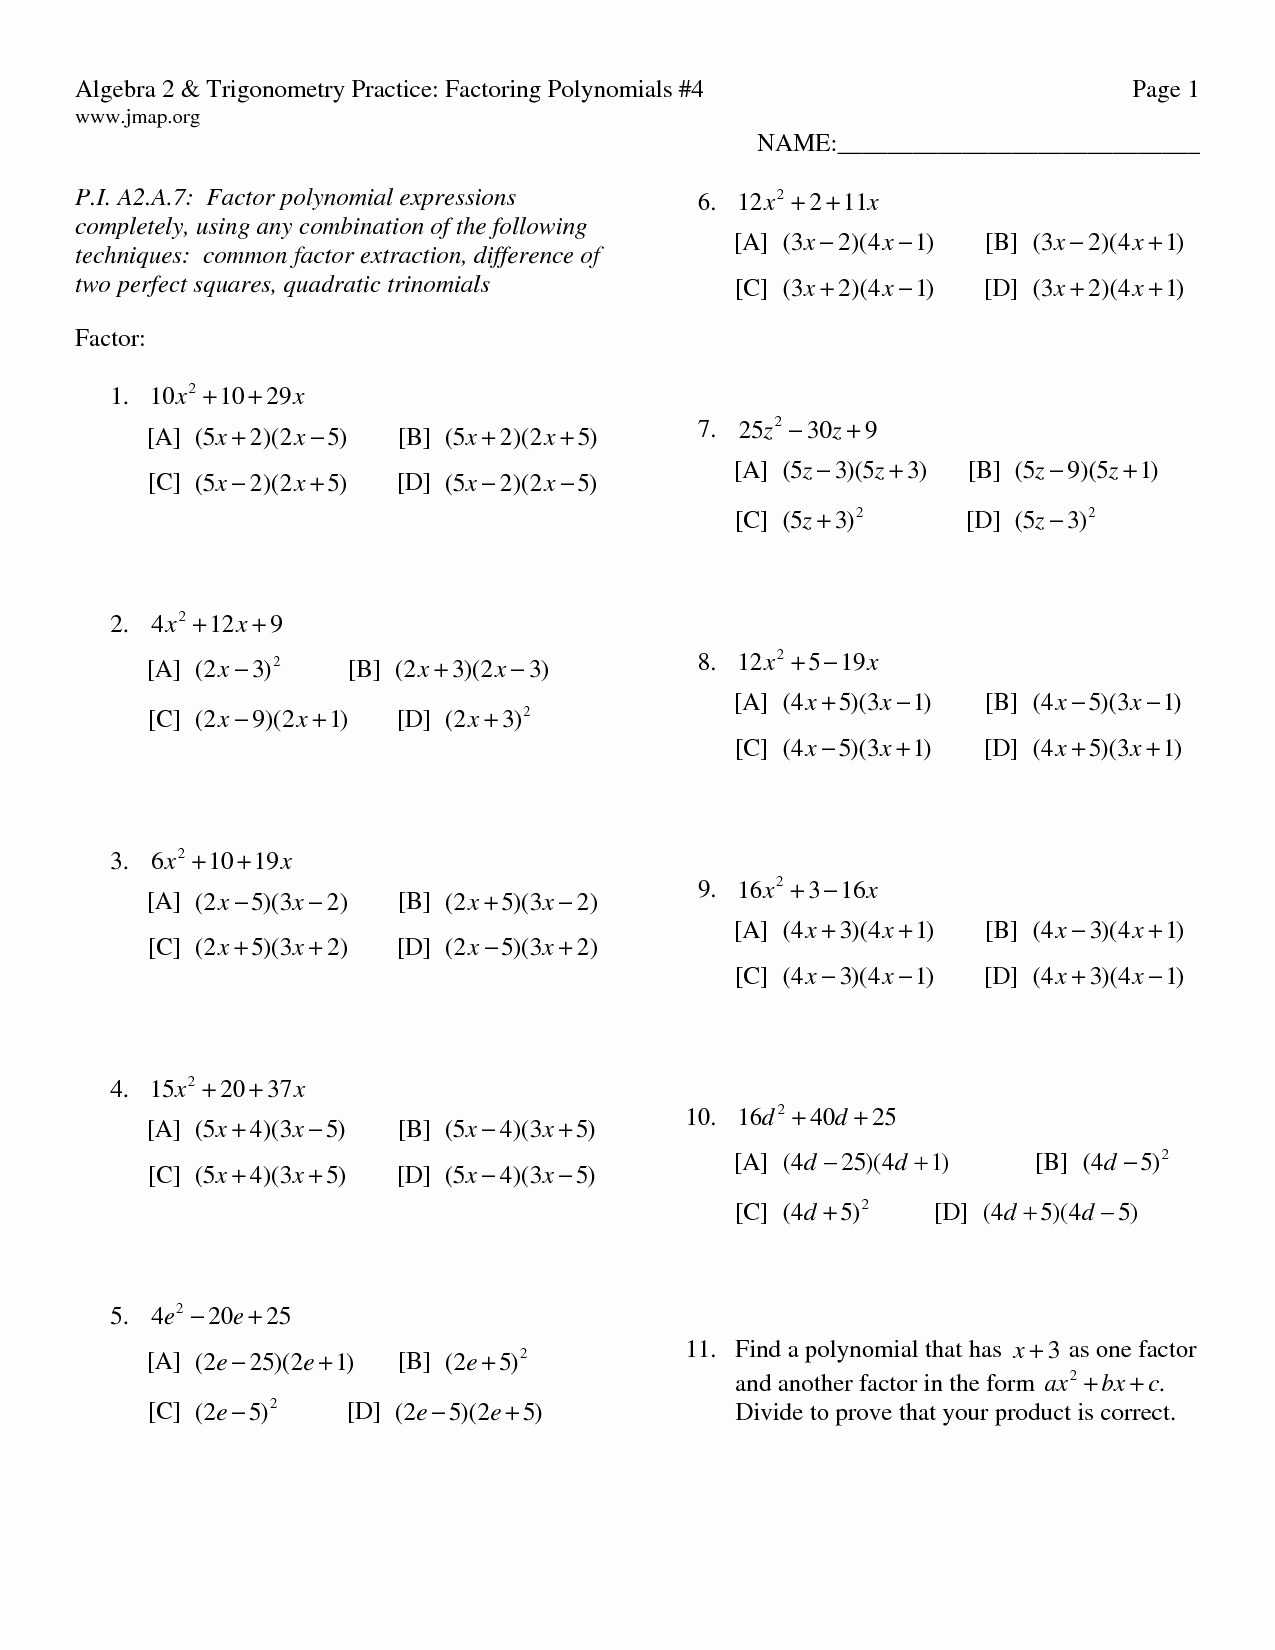 Dividing Polynomials Worksheet Also Worksheet 4